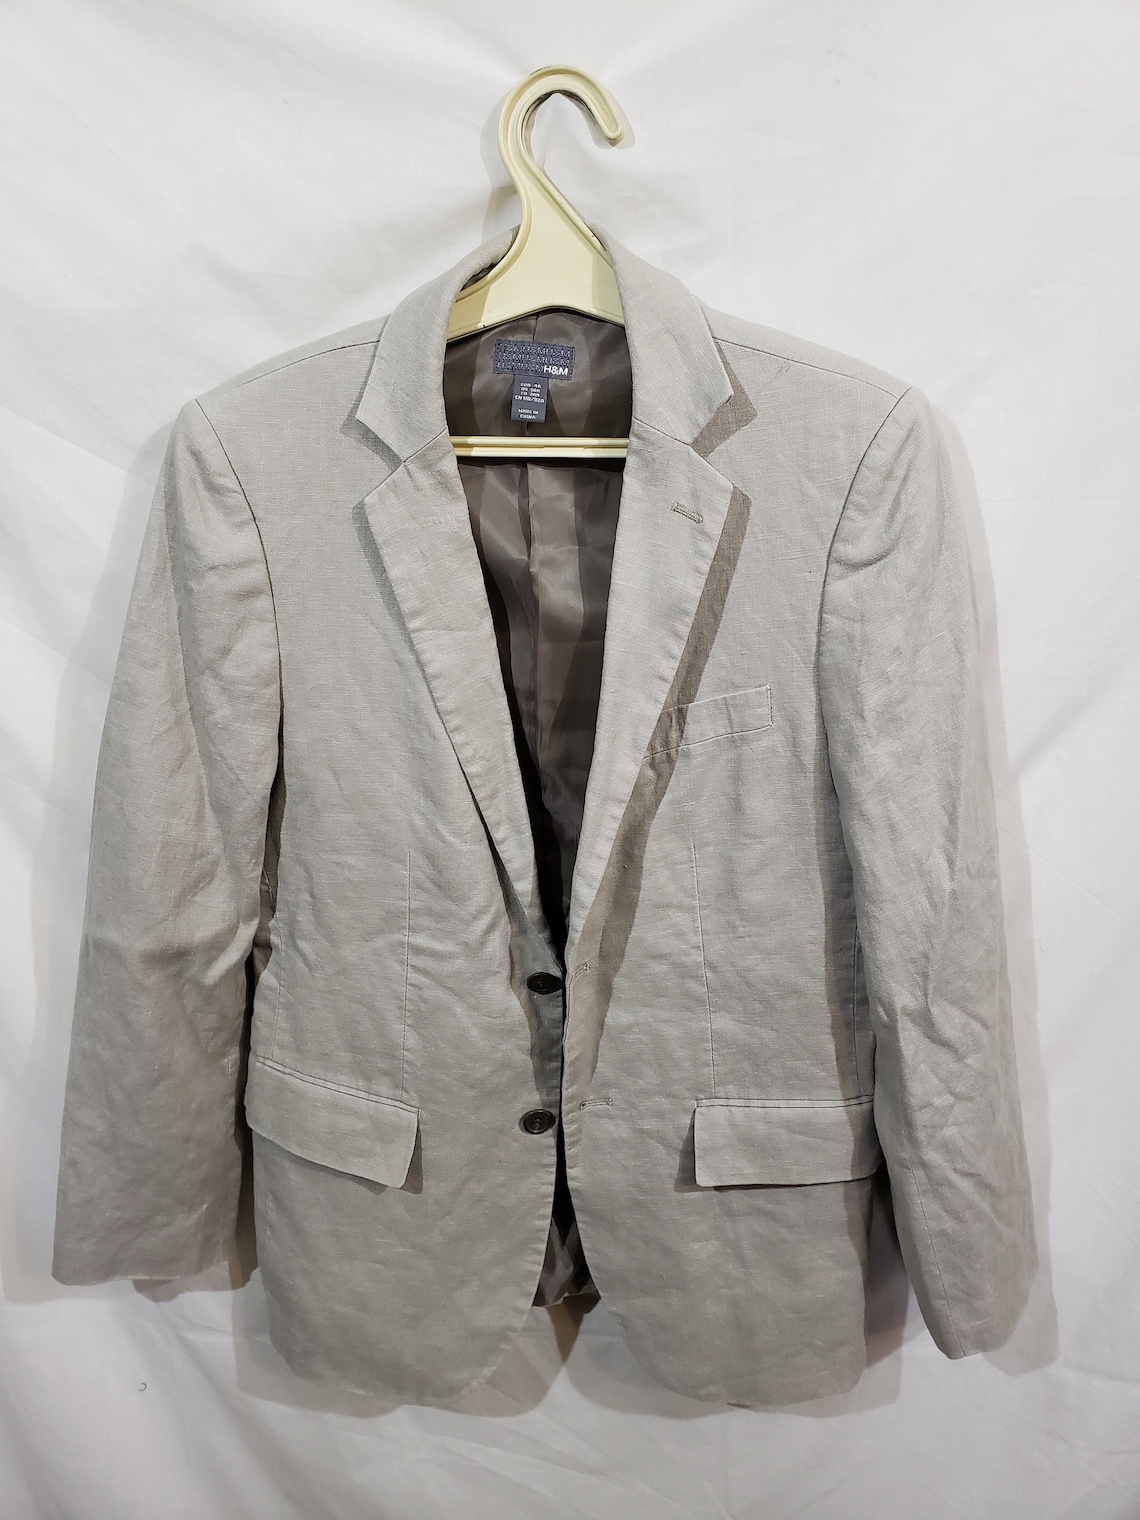 Stylish Men's Beige Linen Jacket. Men's Jacket. Light | Etsy